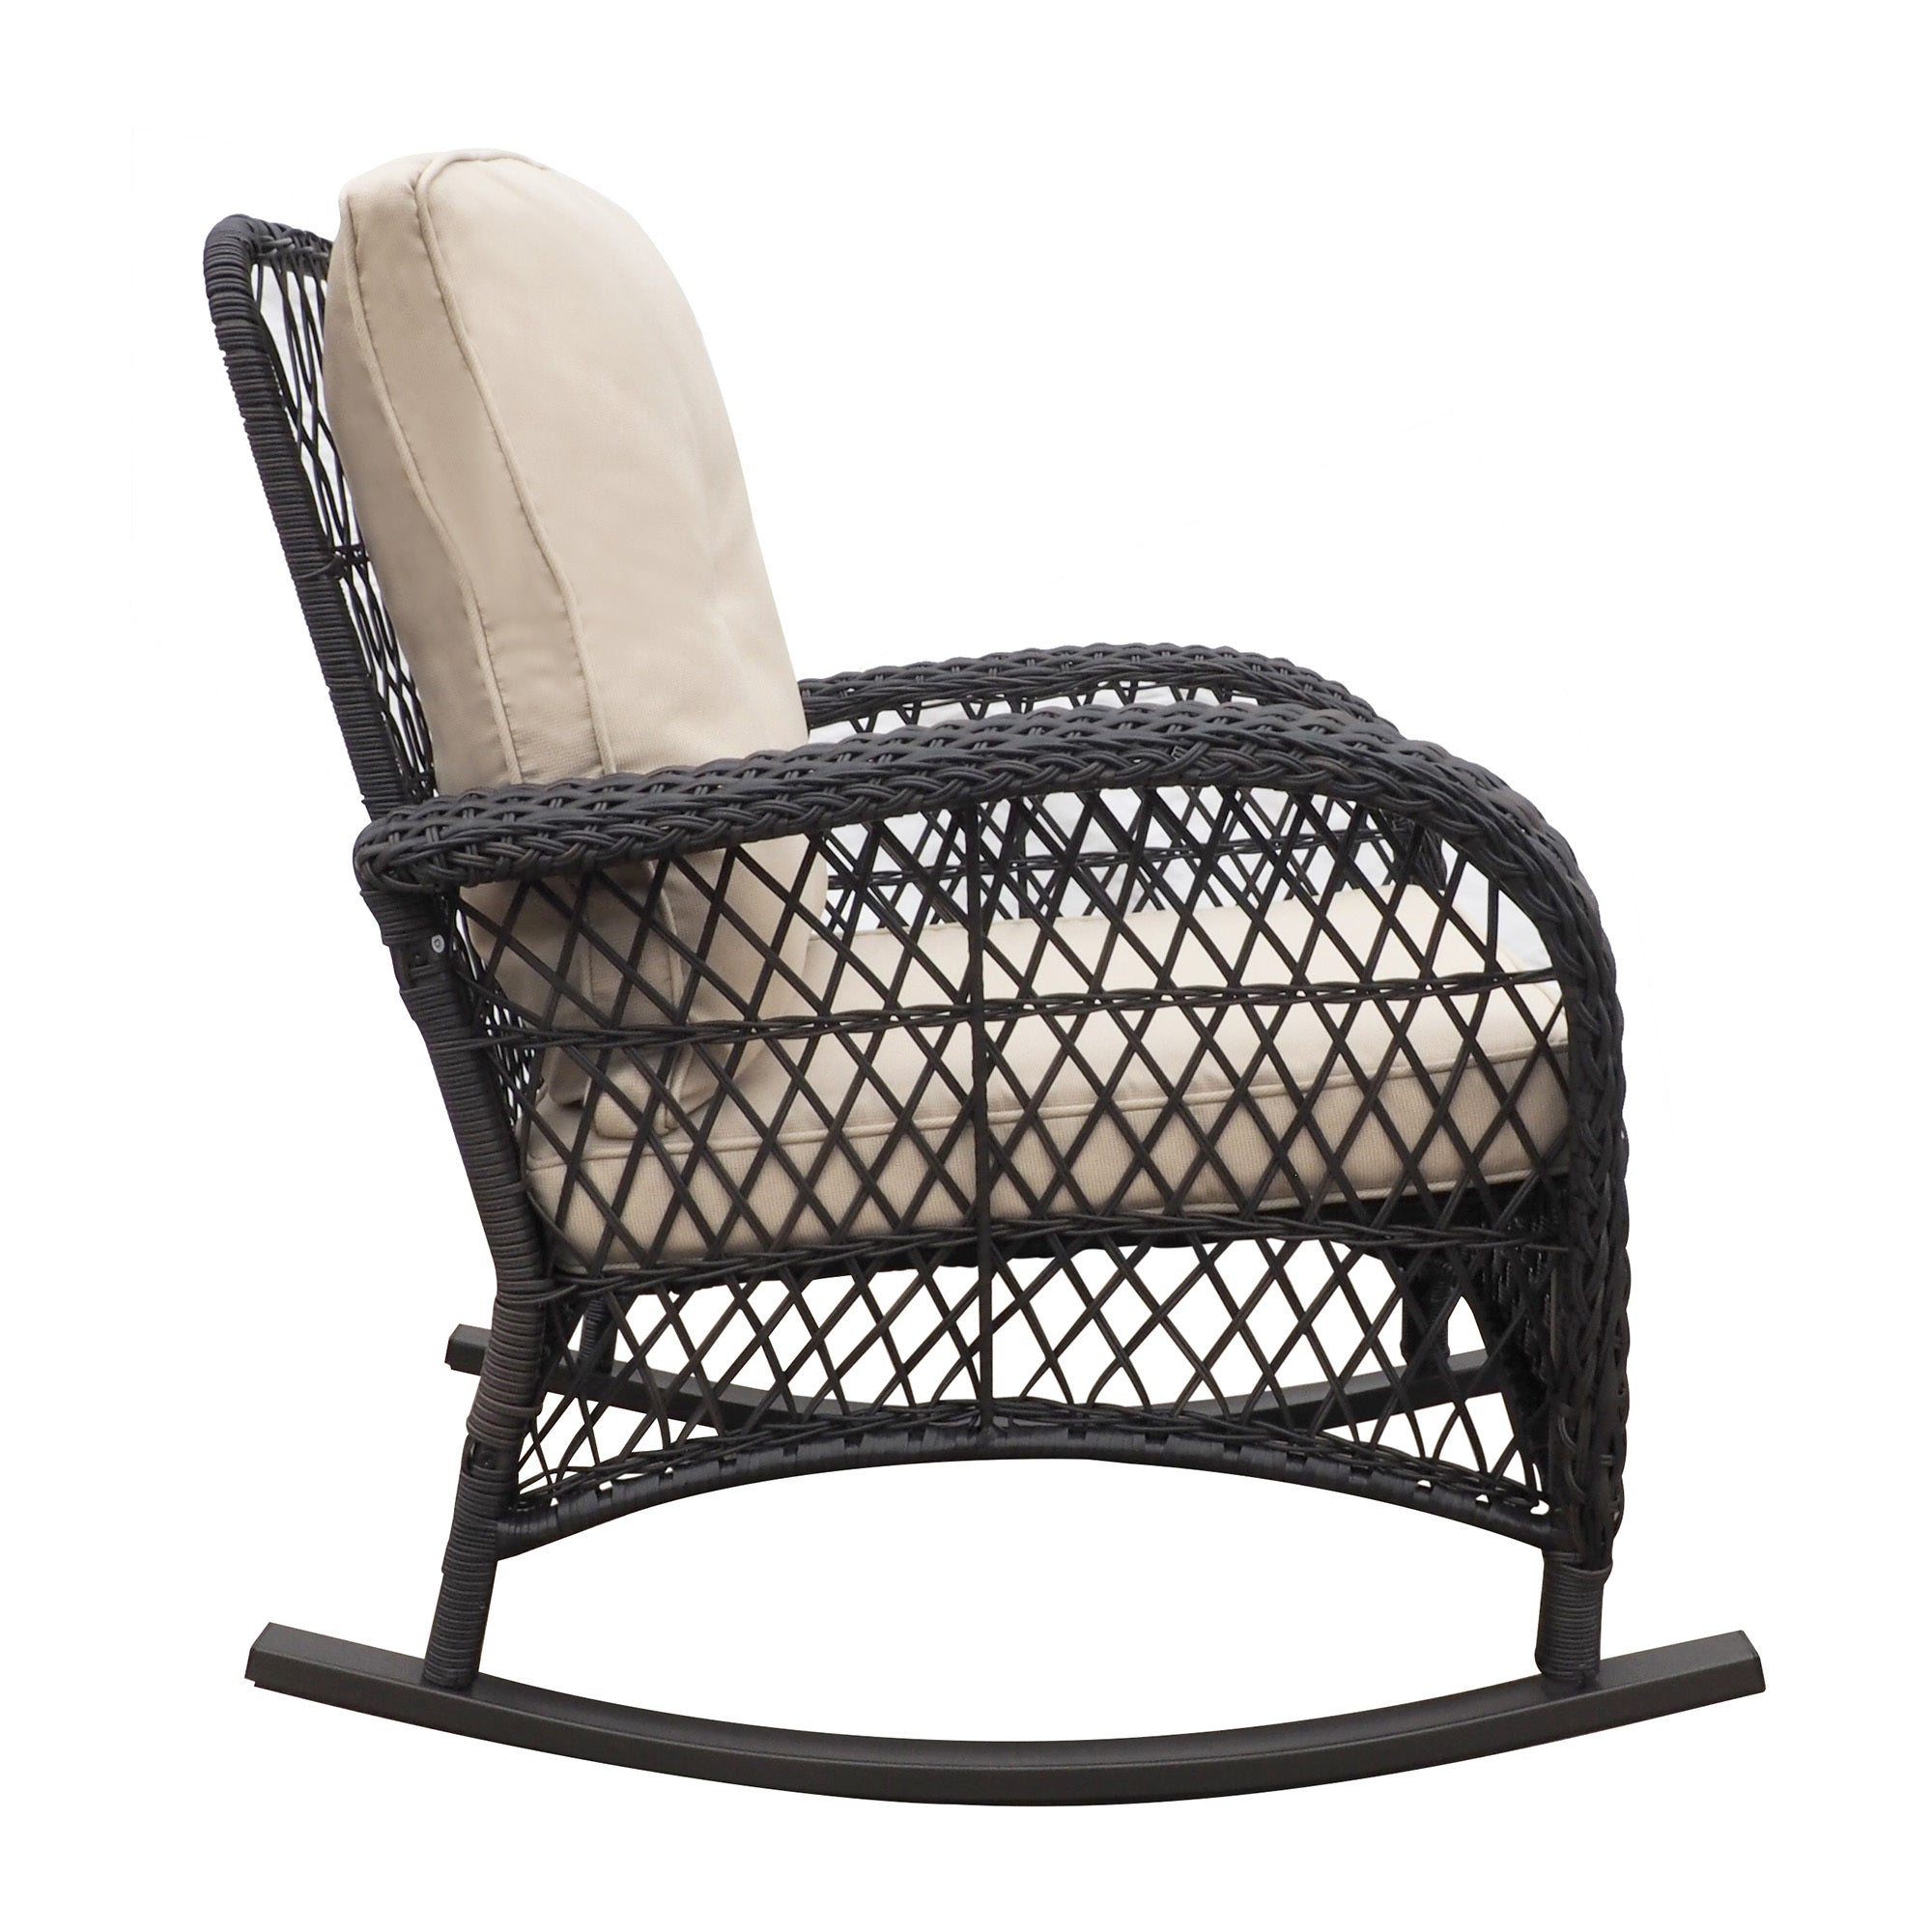 Garden Rocking Chair,Outdoor Rattan Rocker Chair with